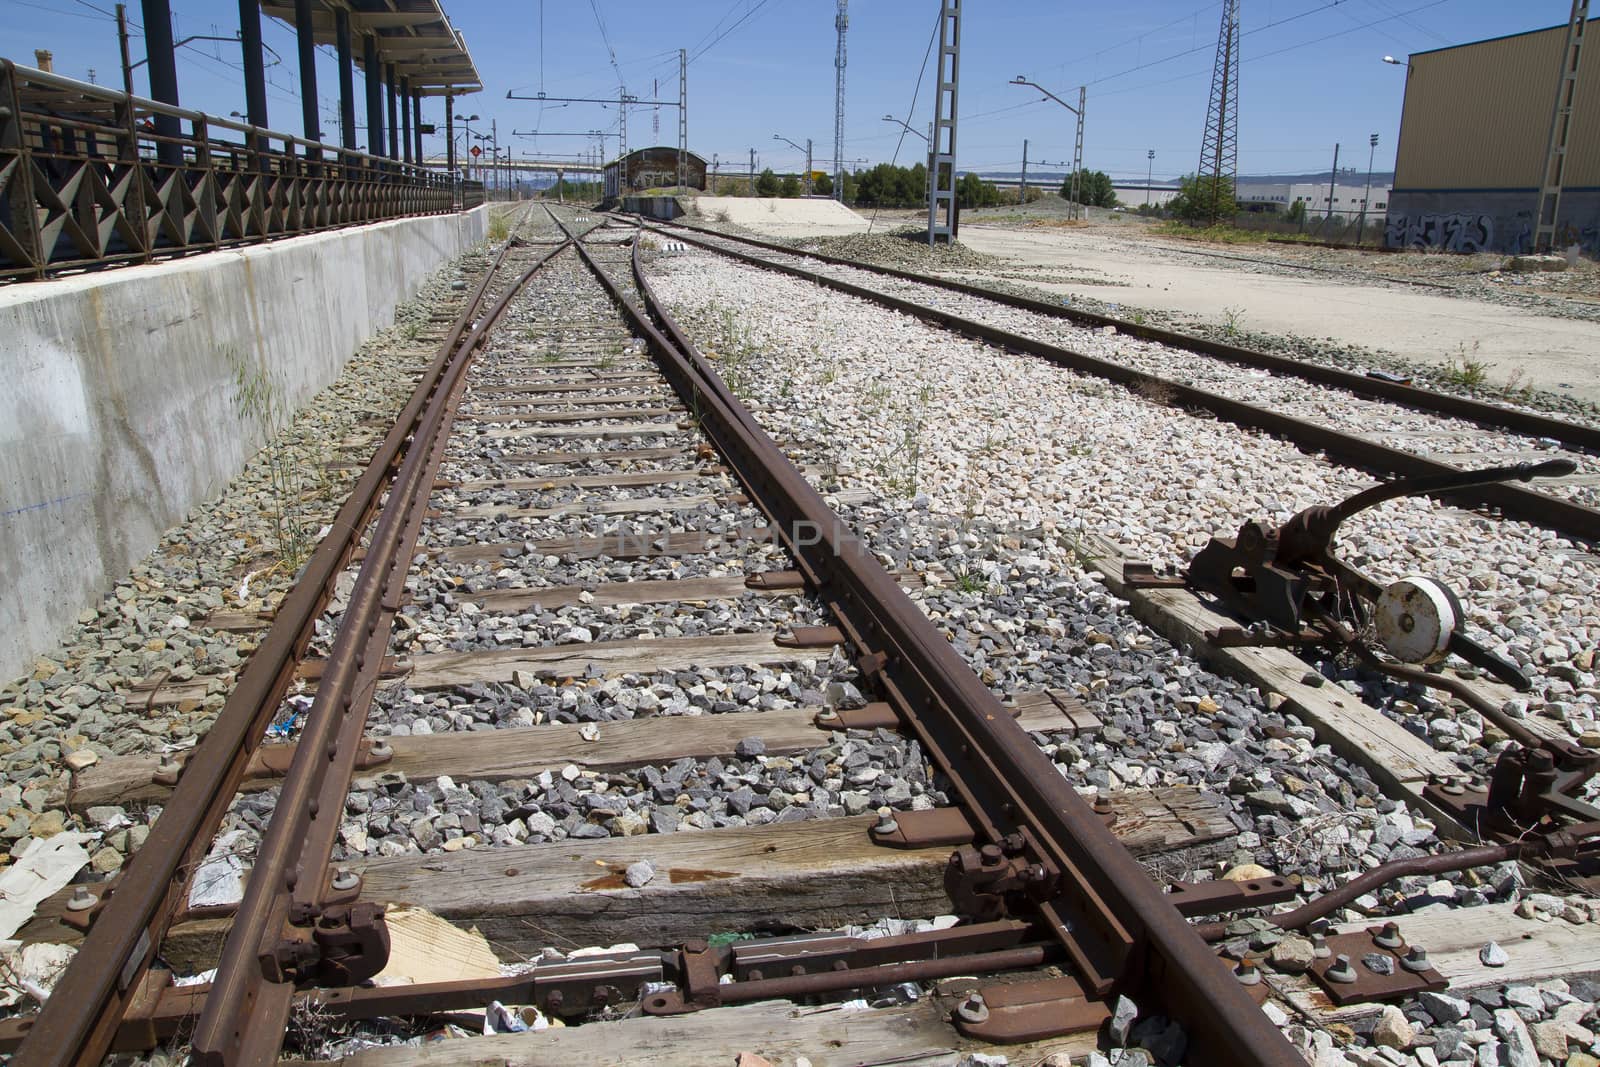 needle exchange, train rails, detail of railways in Spain by FernandoCortes